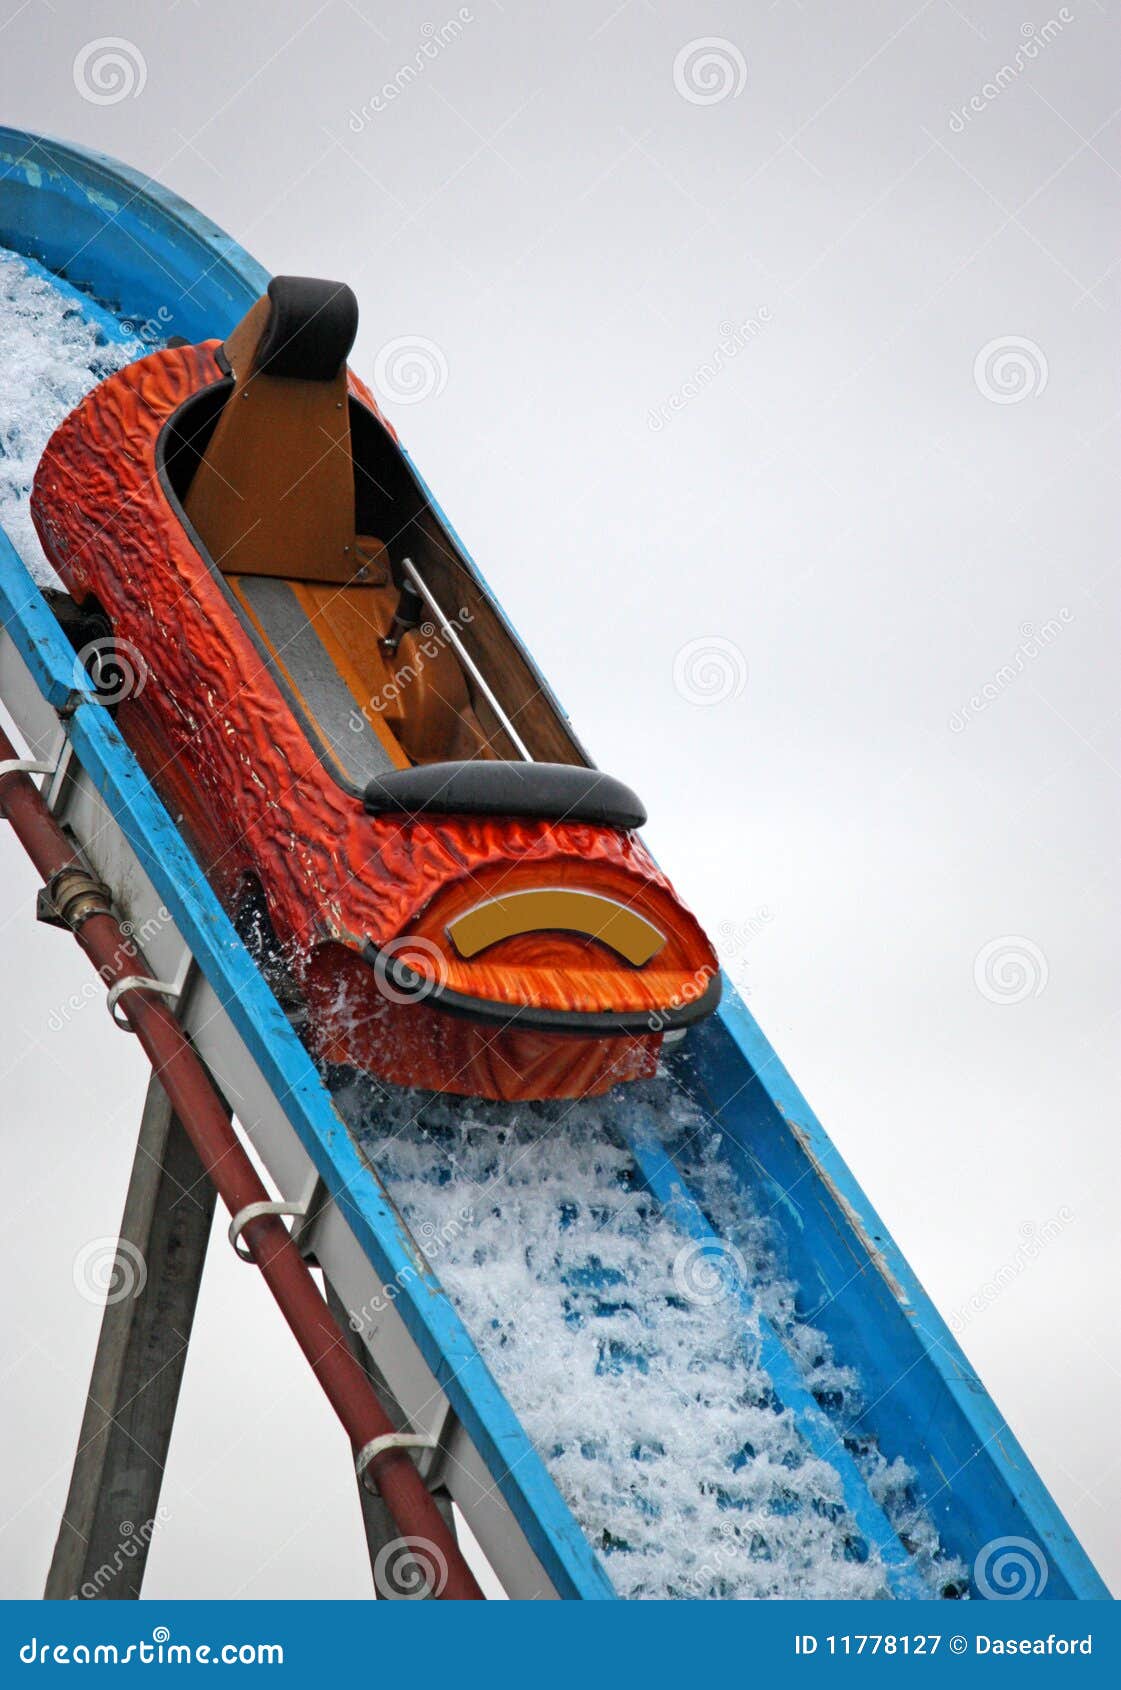 log chute ride